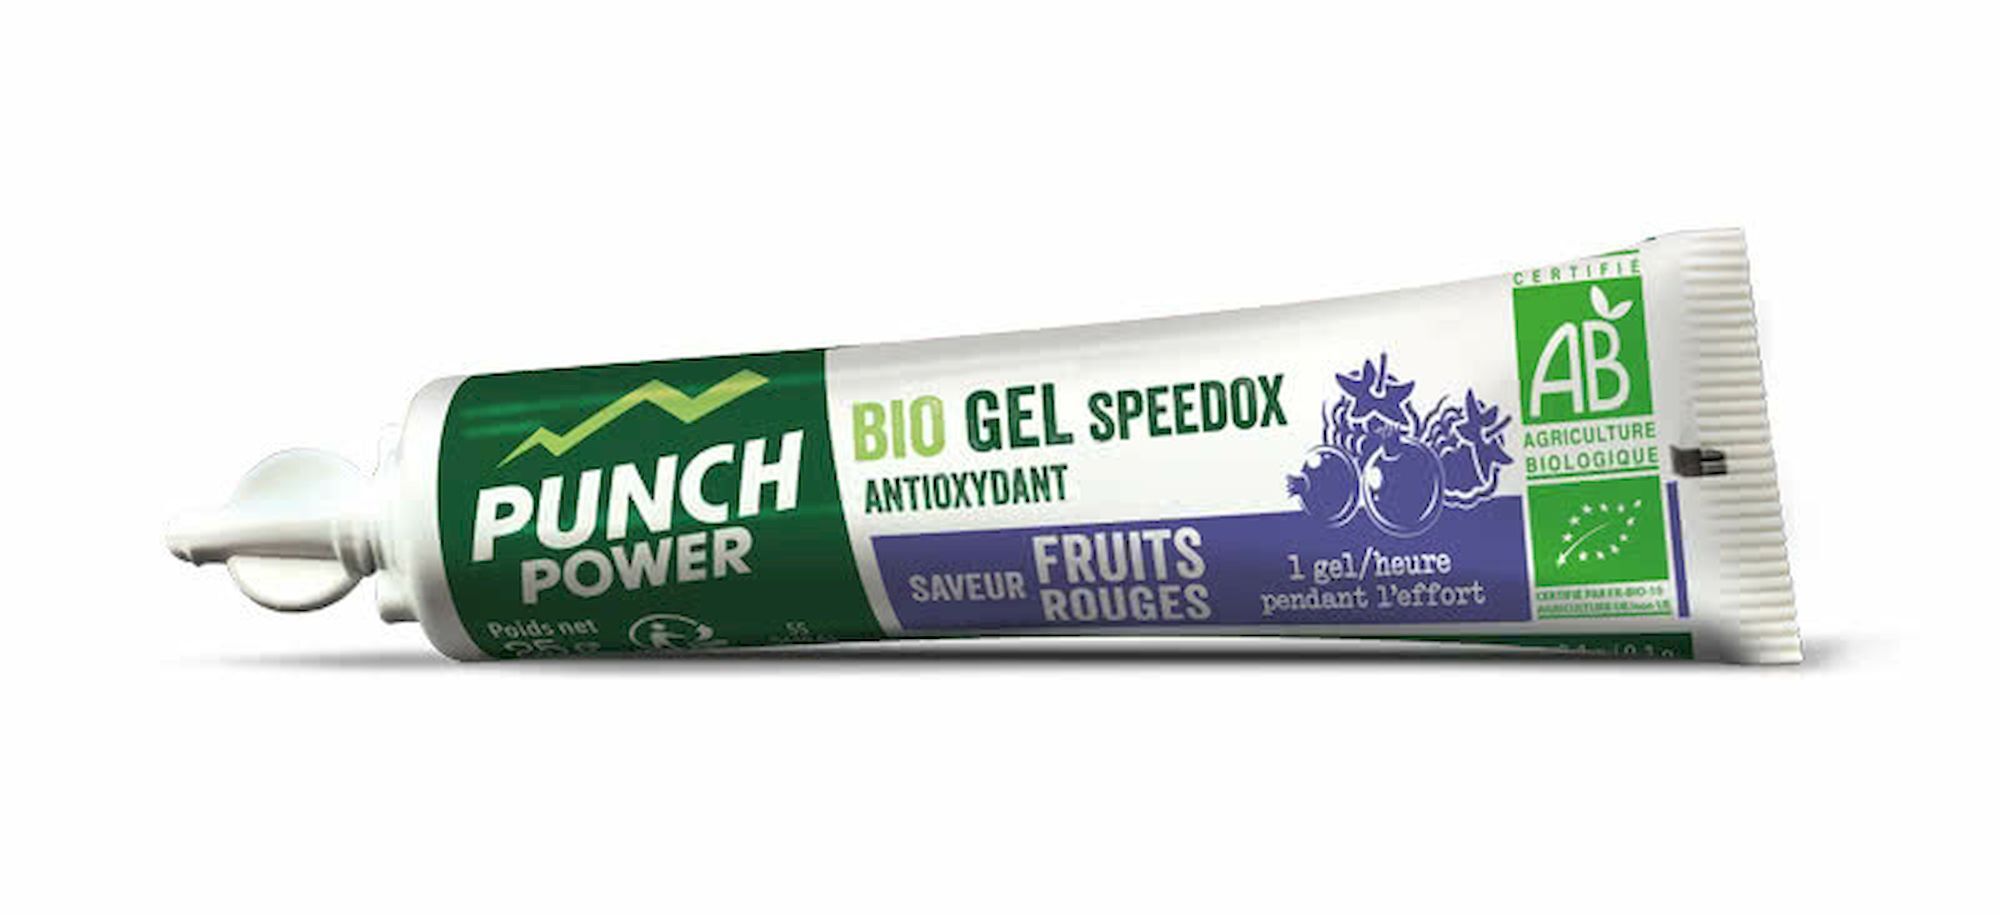 Punch Power Speedox Fruits Rouges x 6 - Zel energetyczny | Hardloop